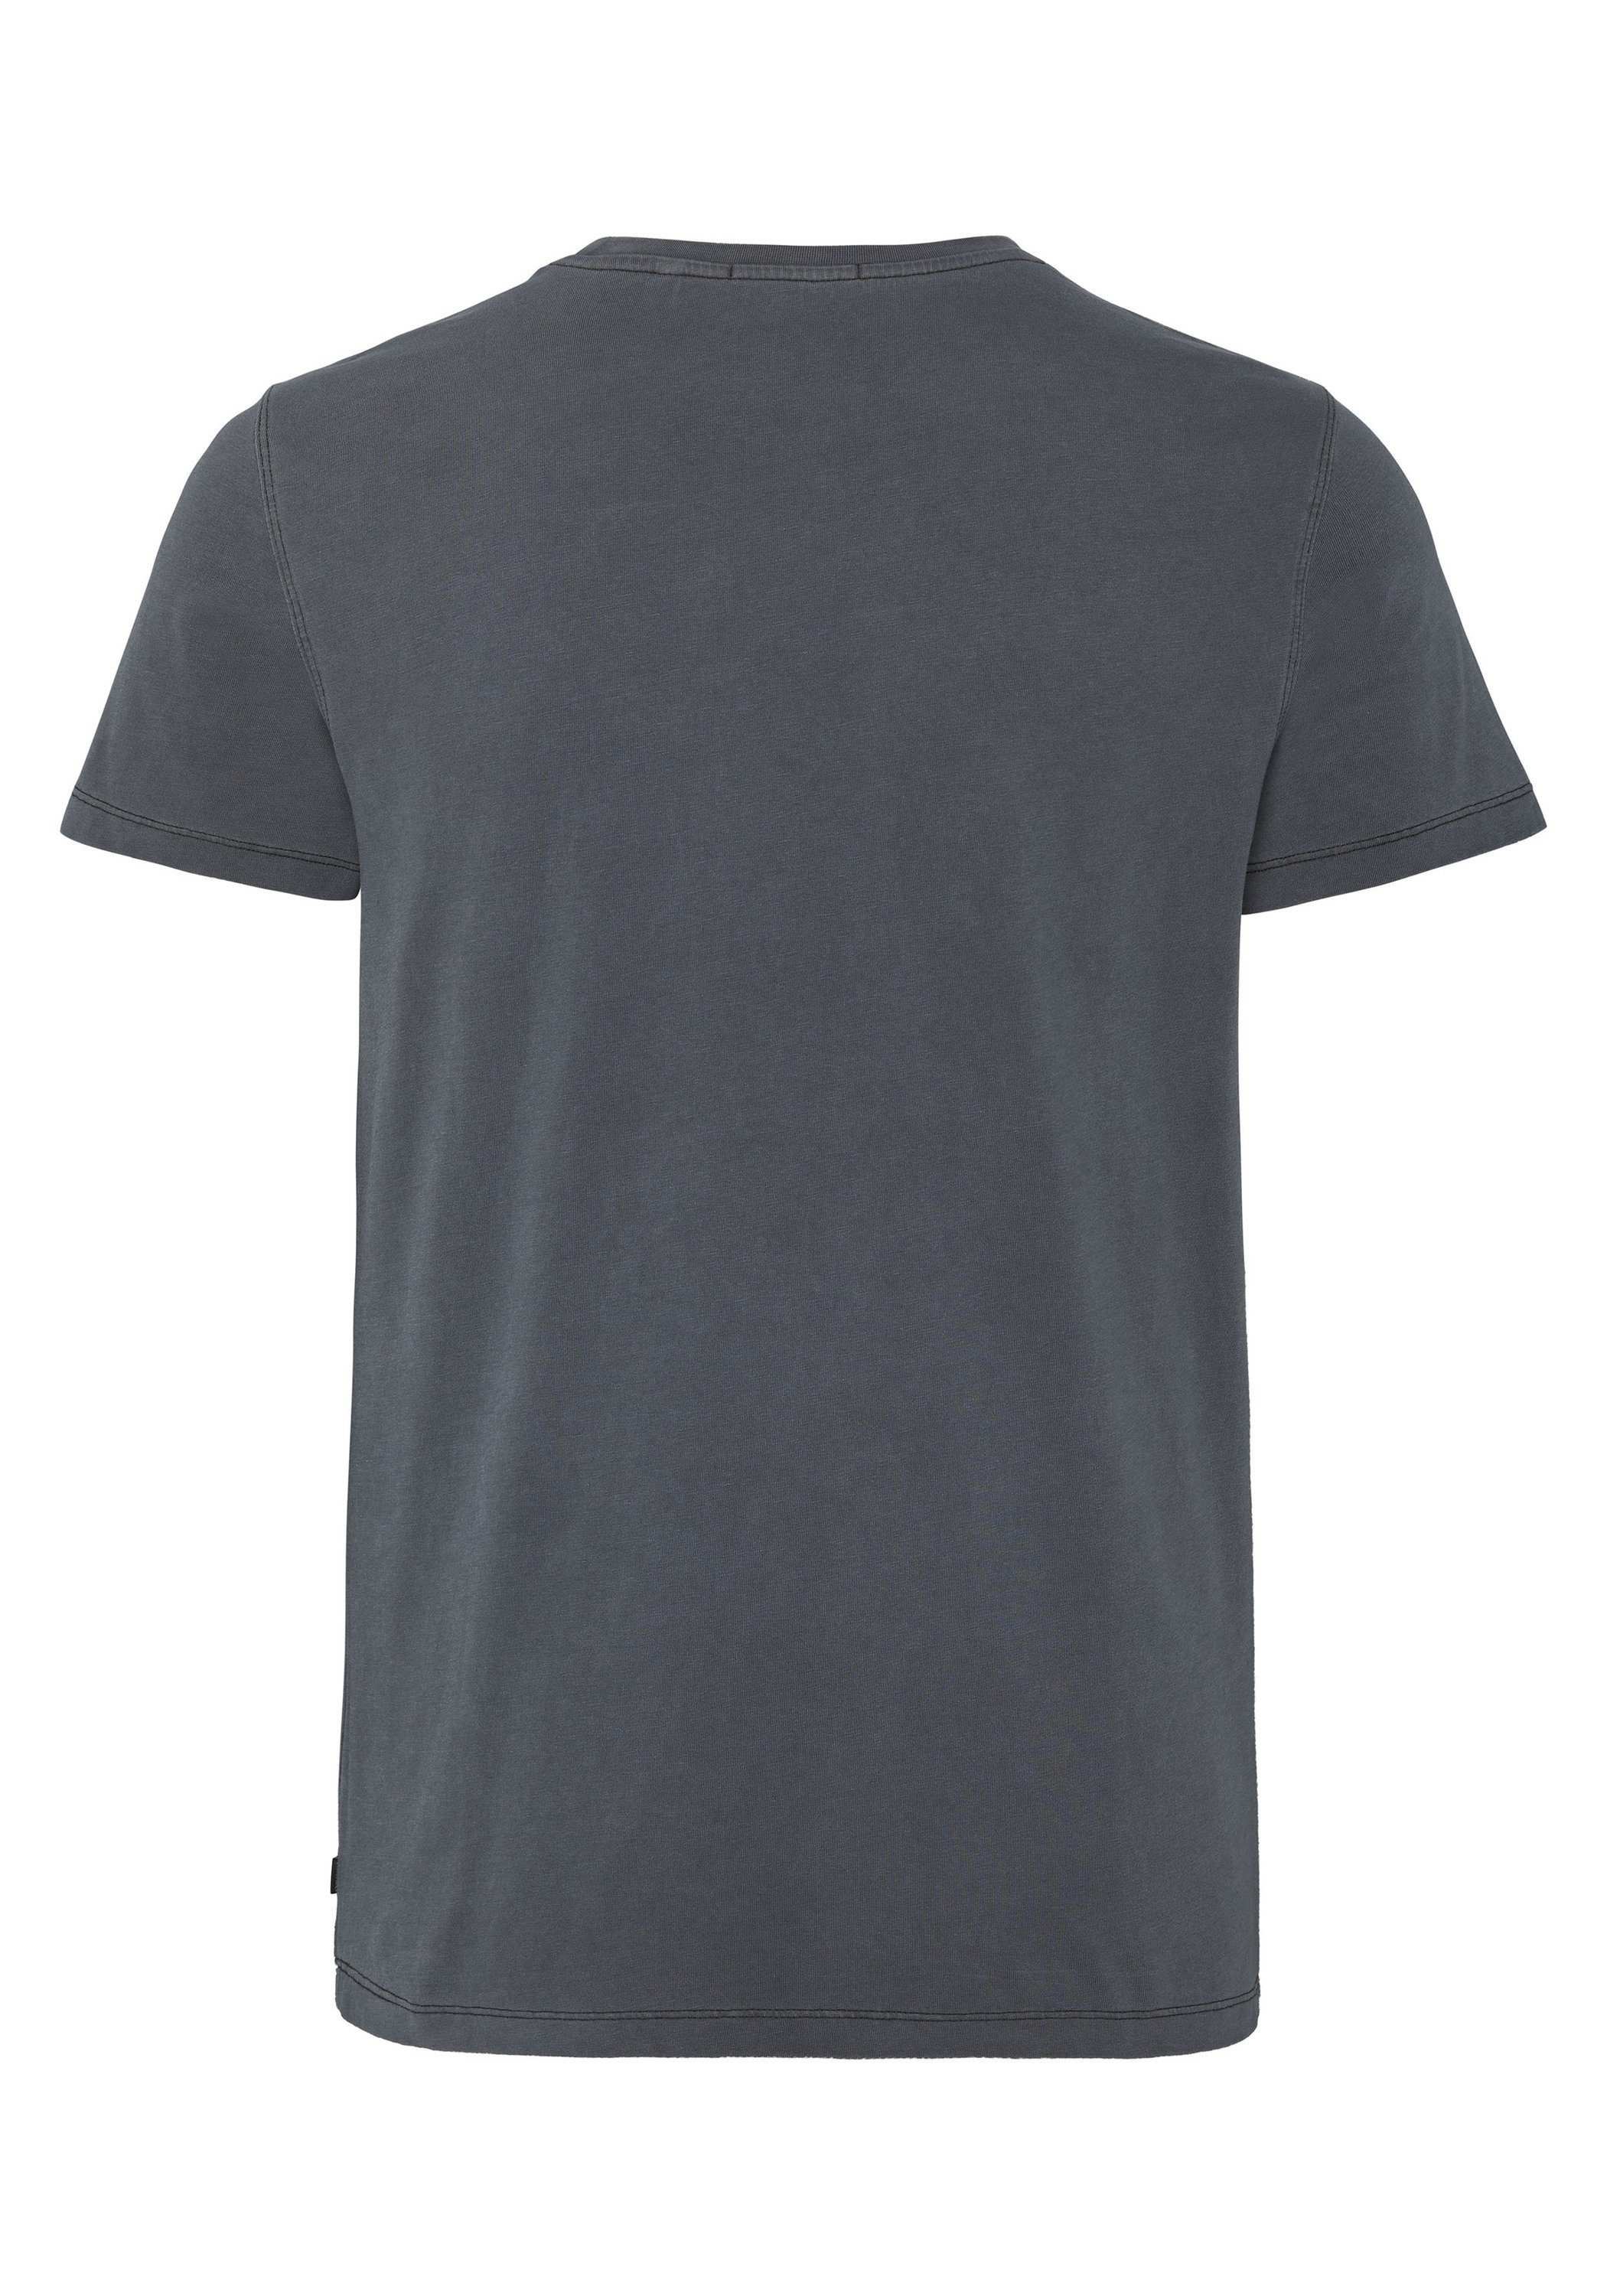 T-Shirt aus Beauty Chiemsee 19-3911 Black 1 Print-Shirt Baumwolle